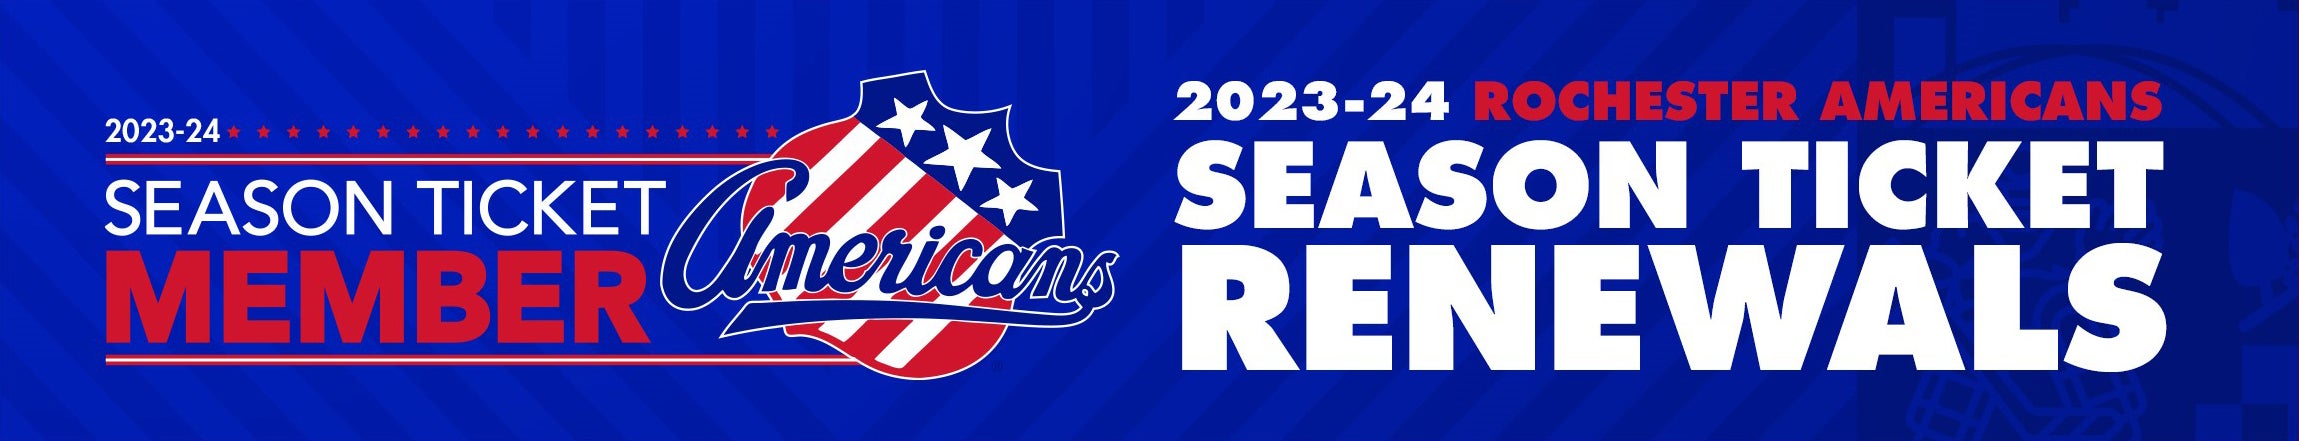 2023-24 Season Ticket Member Renewals